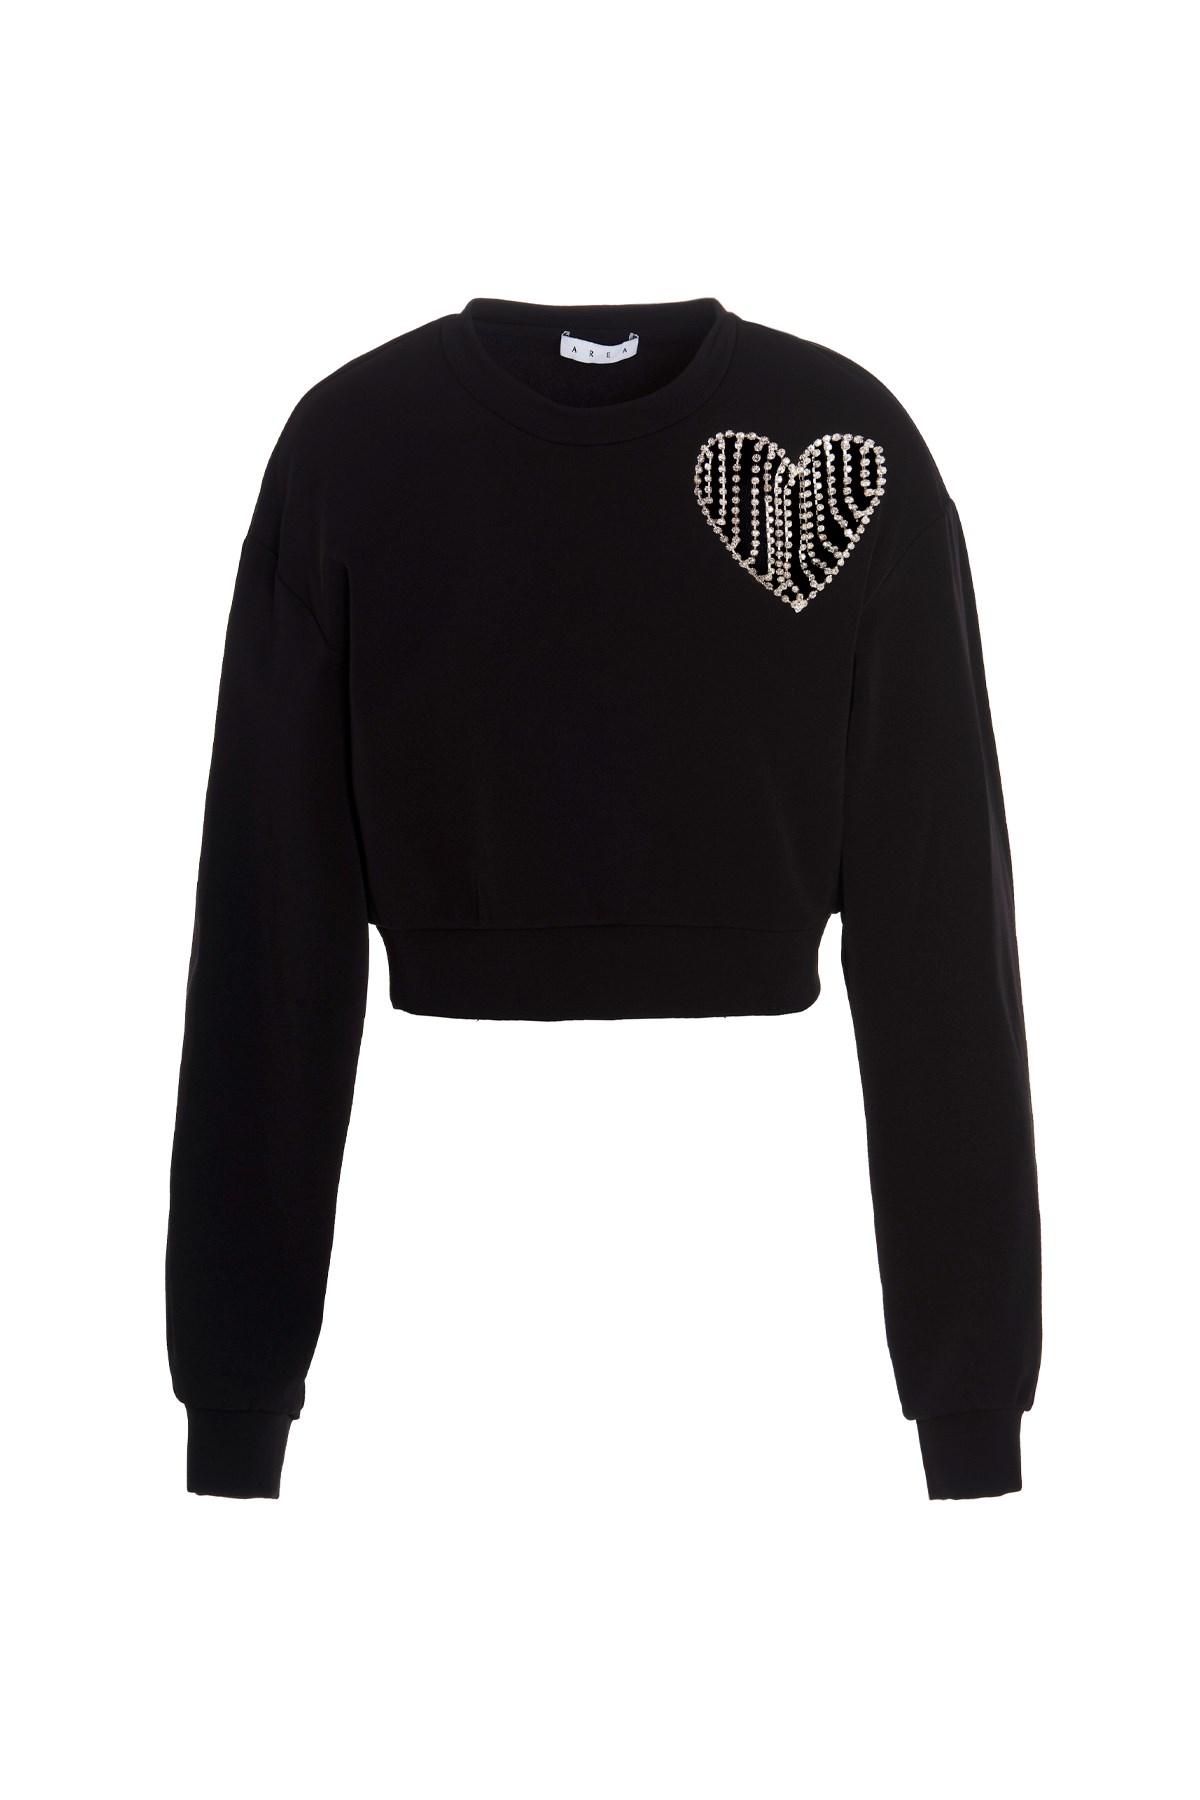 AREA 'Heart Cutout’ Sweatshirt